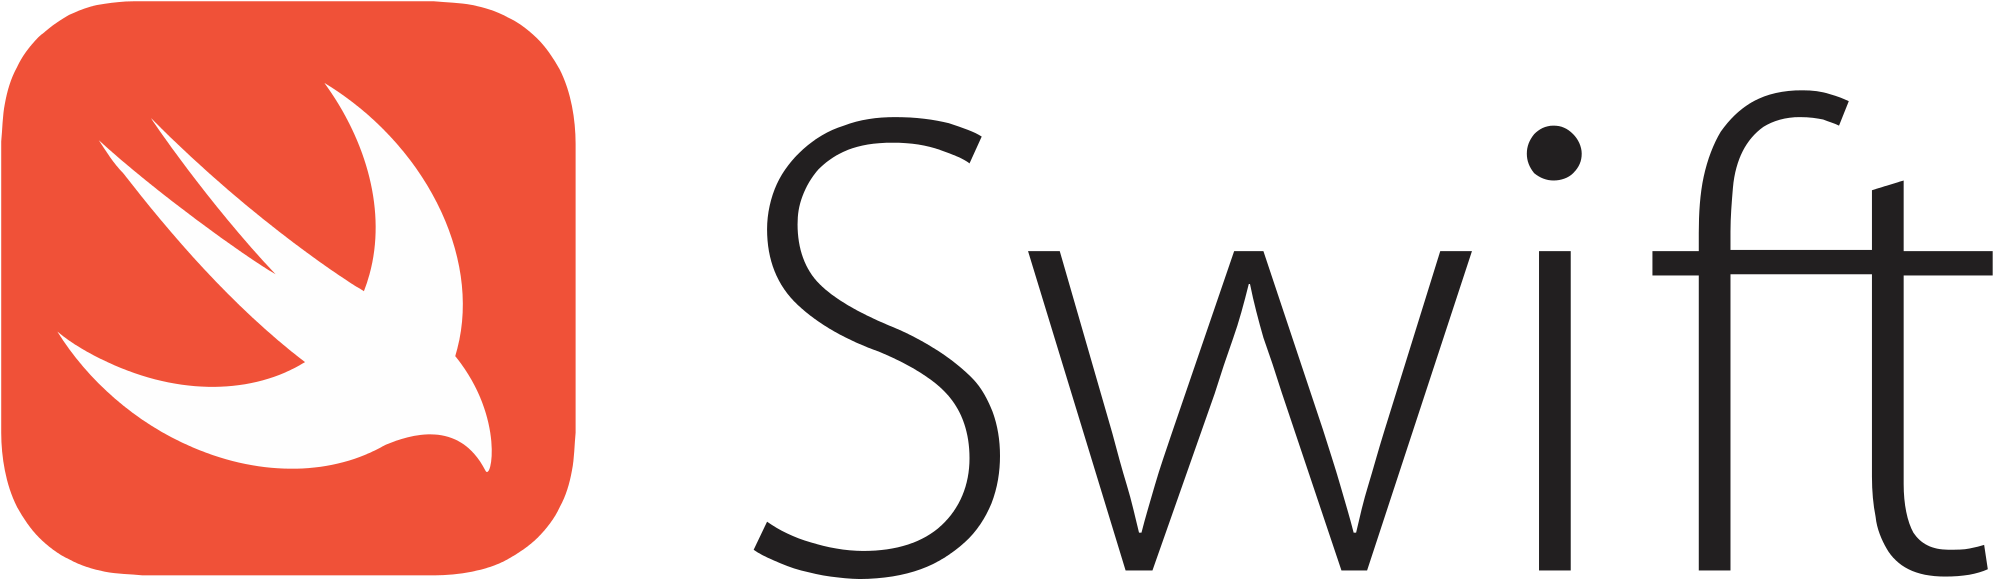 Ios Programming Development - Swift Programming Language Logo (2000x585)